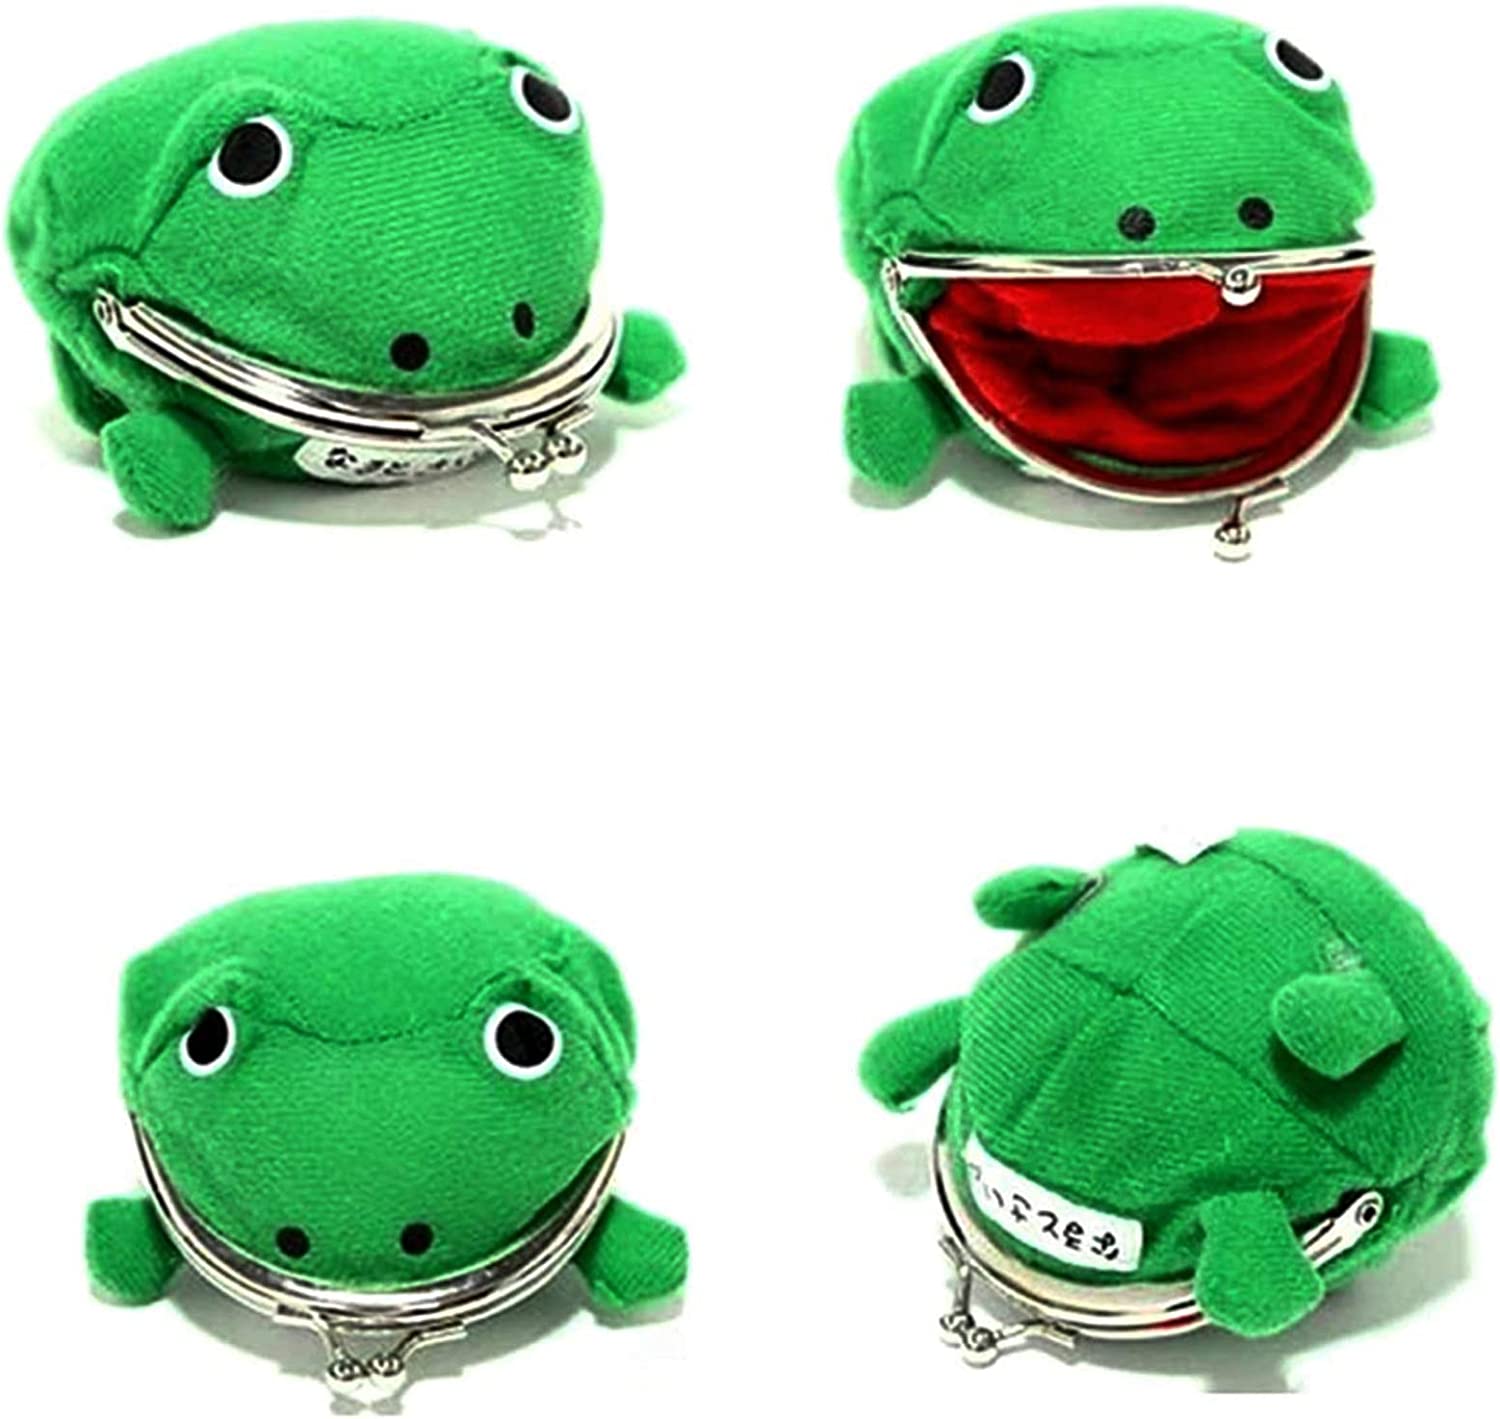 Naruto Frog Wallet Cosplay accessories ناروتو محفظة نقود على شكل ضفدع